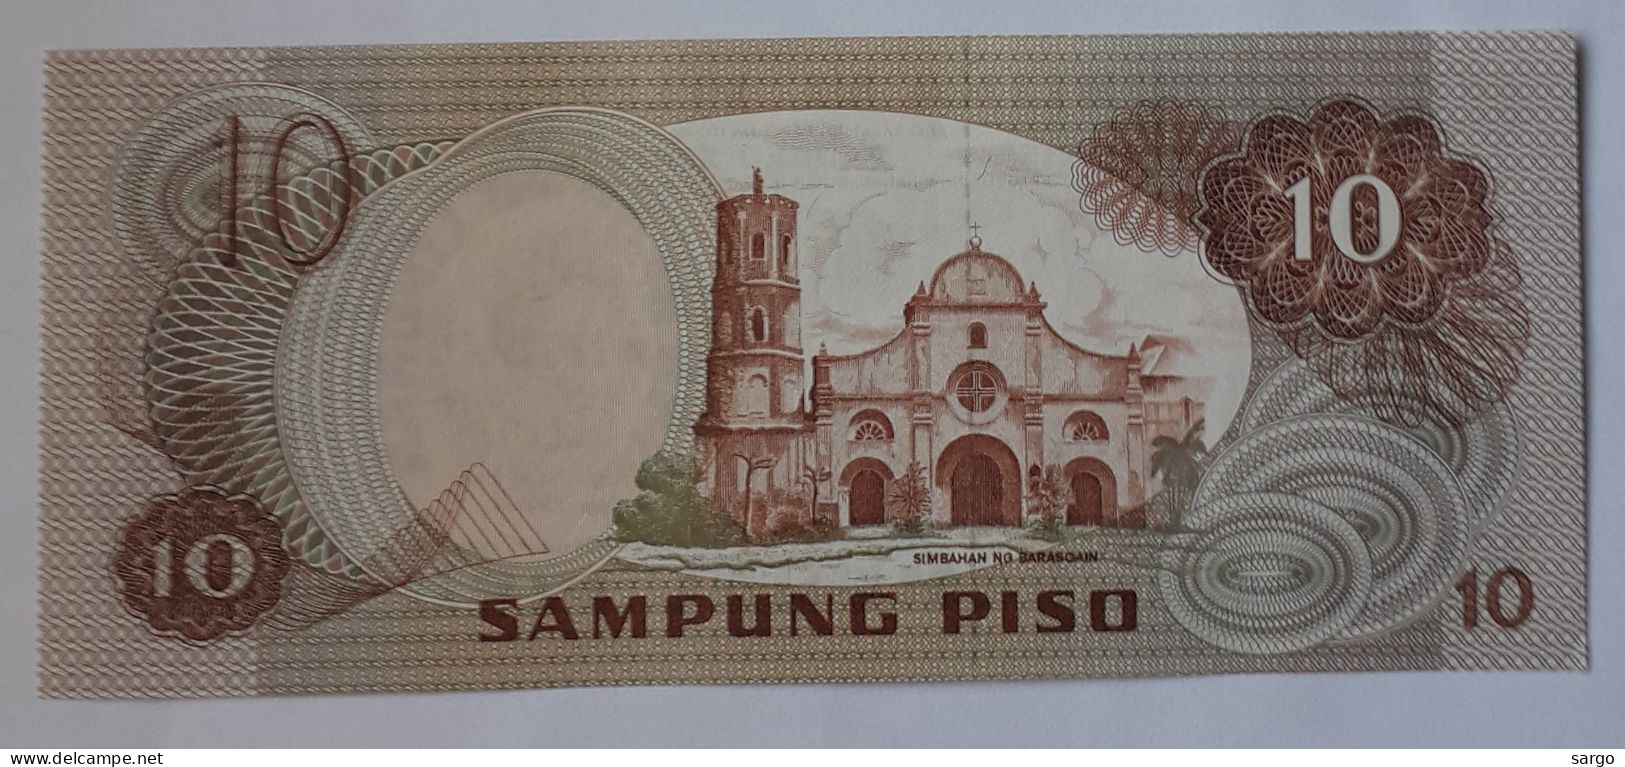 PHILIPPINES  - 10 PISU - 1981 - P 161b - UNC - BANKNOTES - PAPER MONEY - CARTAMONETA - - Filippine